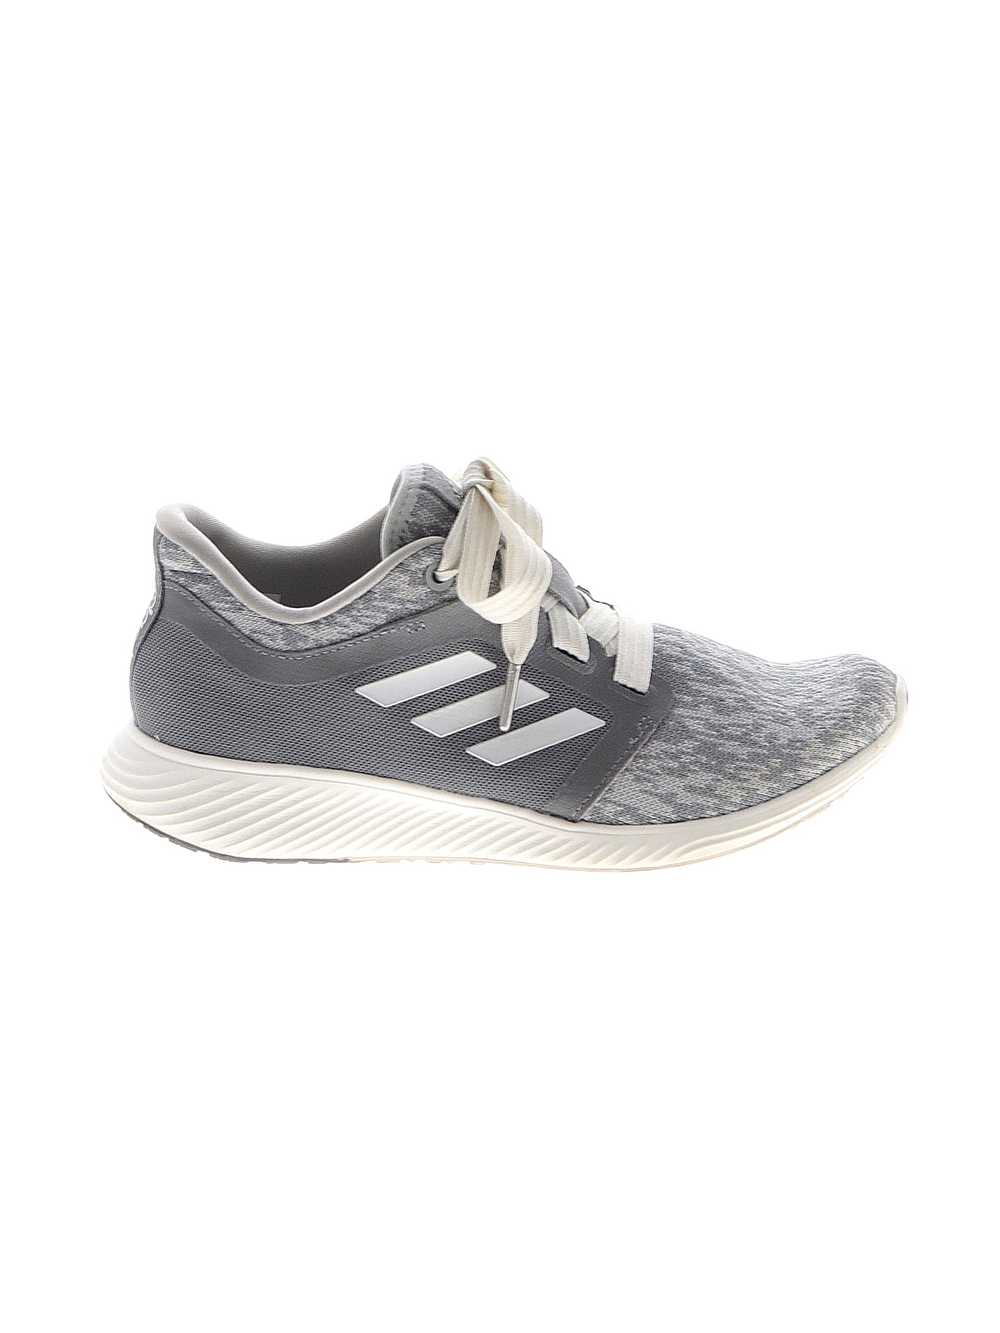 Adidas Women Gray Sneakers 7 - image 1